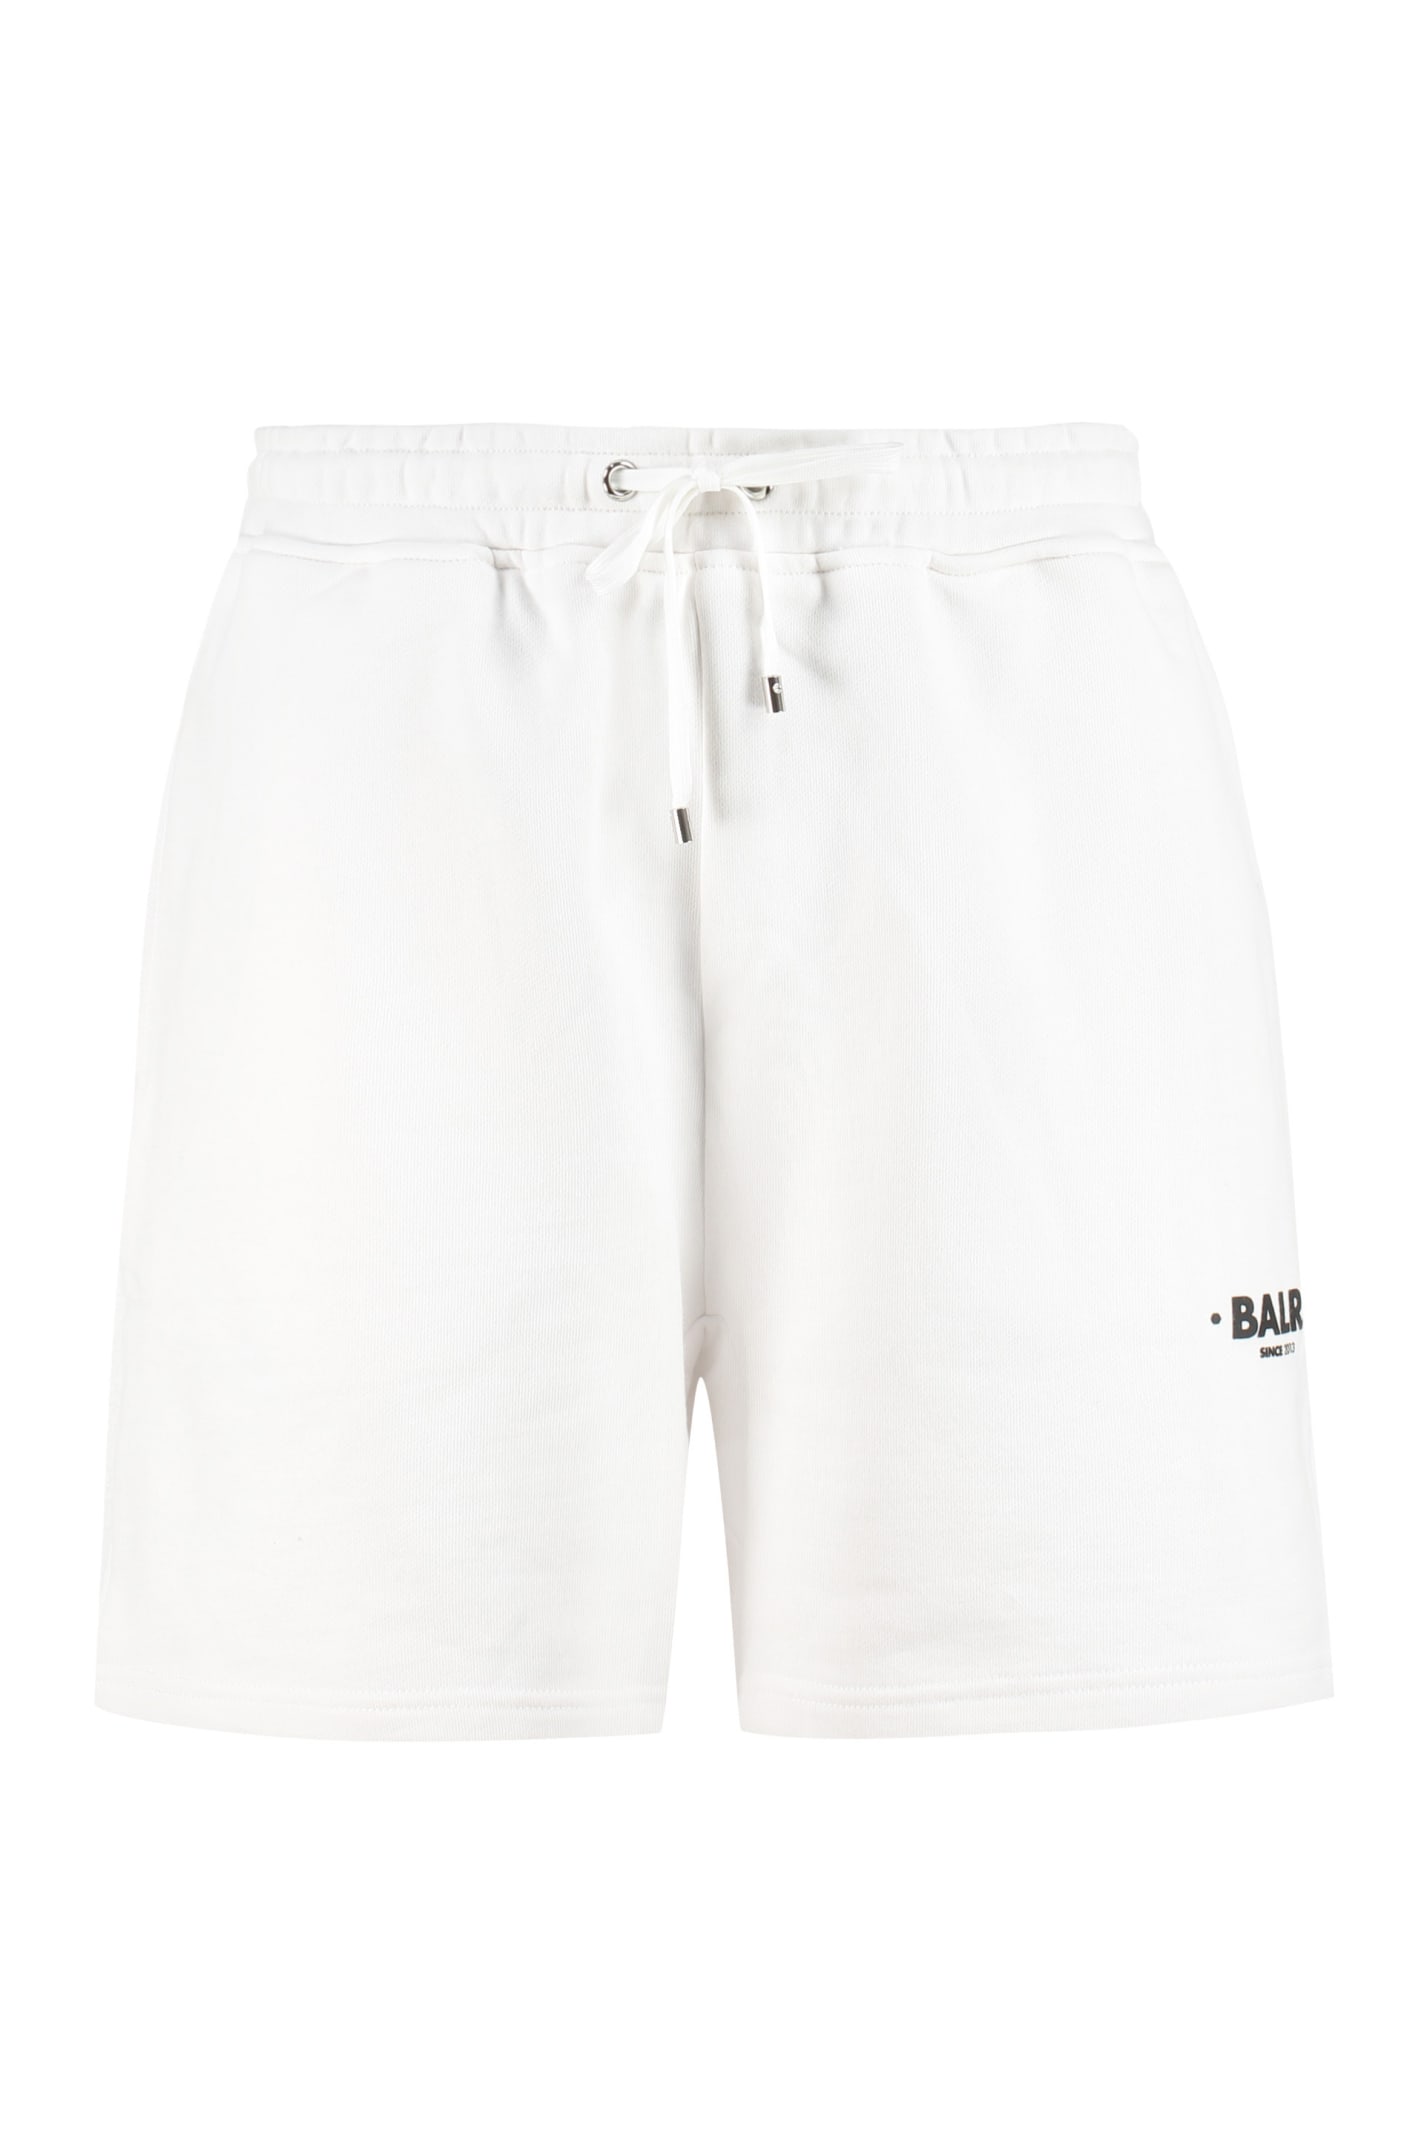 BALR. Cotton Bermuda Shorts